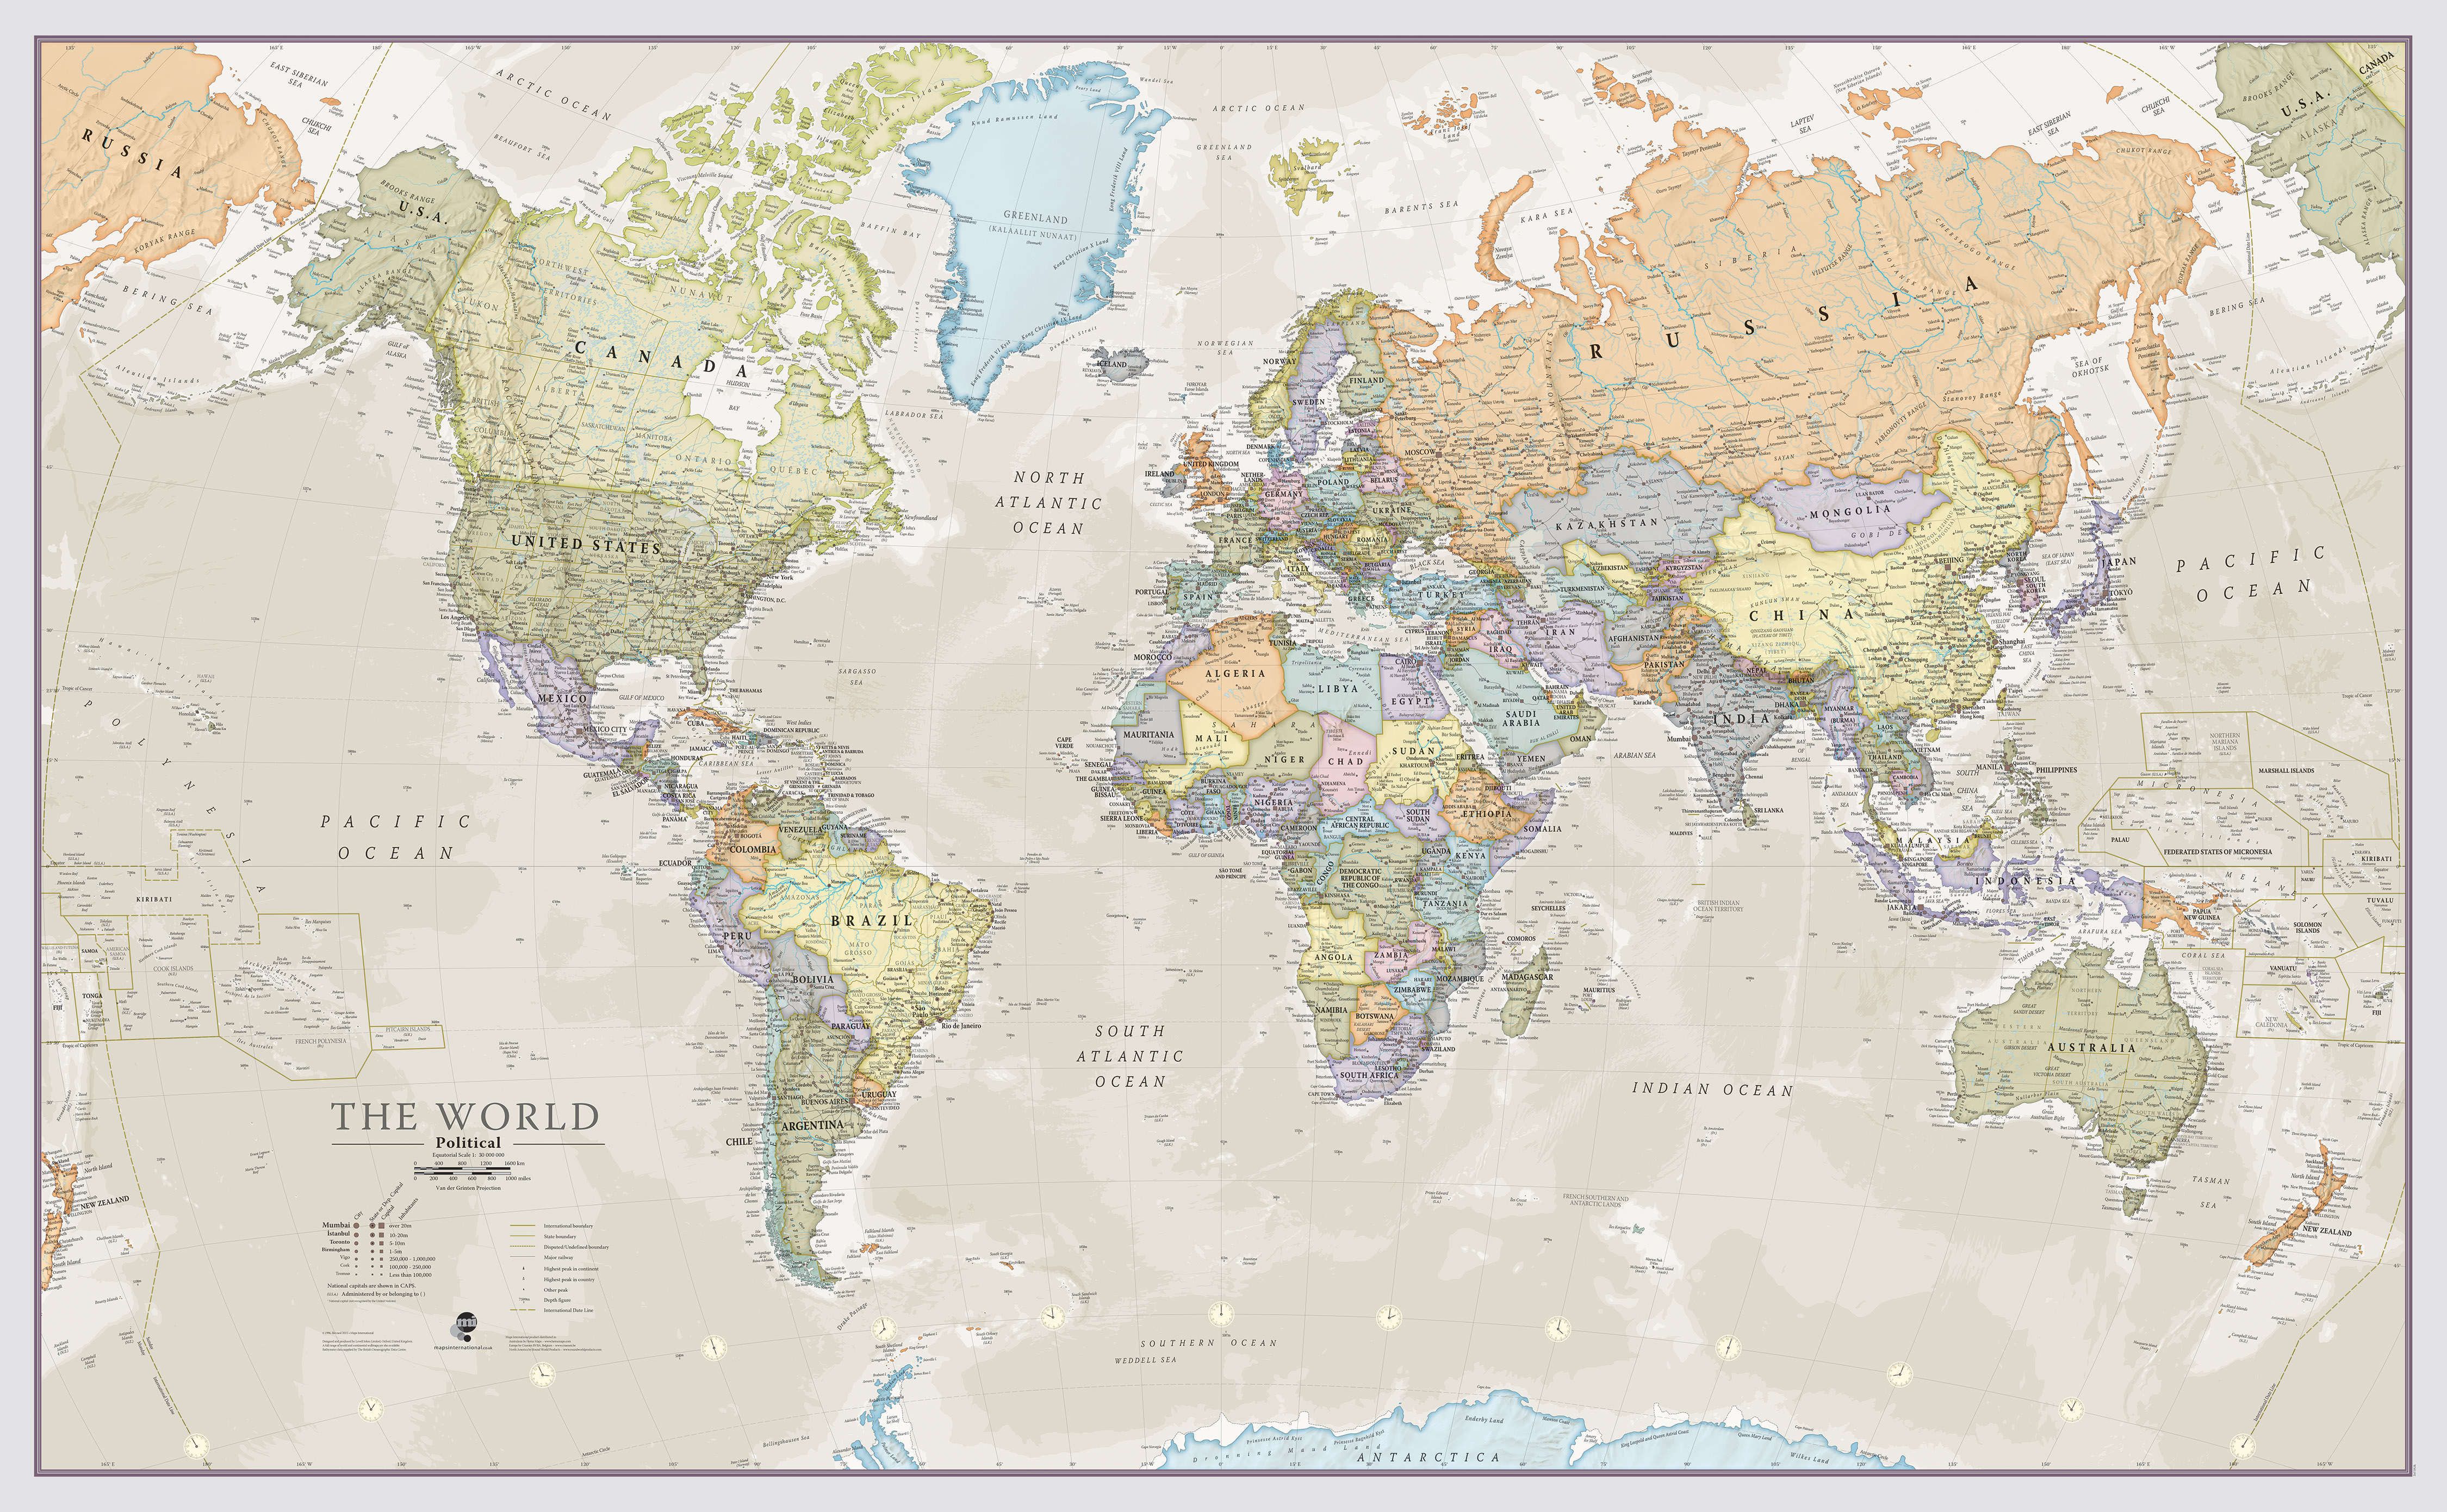 Cuadro Mapa Mundi Global Terrestre Mural Grande Clasico Descripcion Images